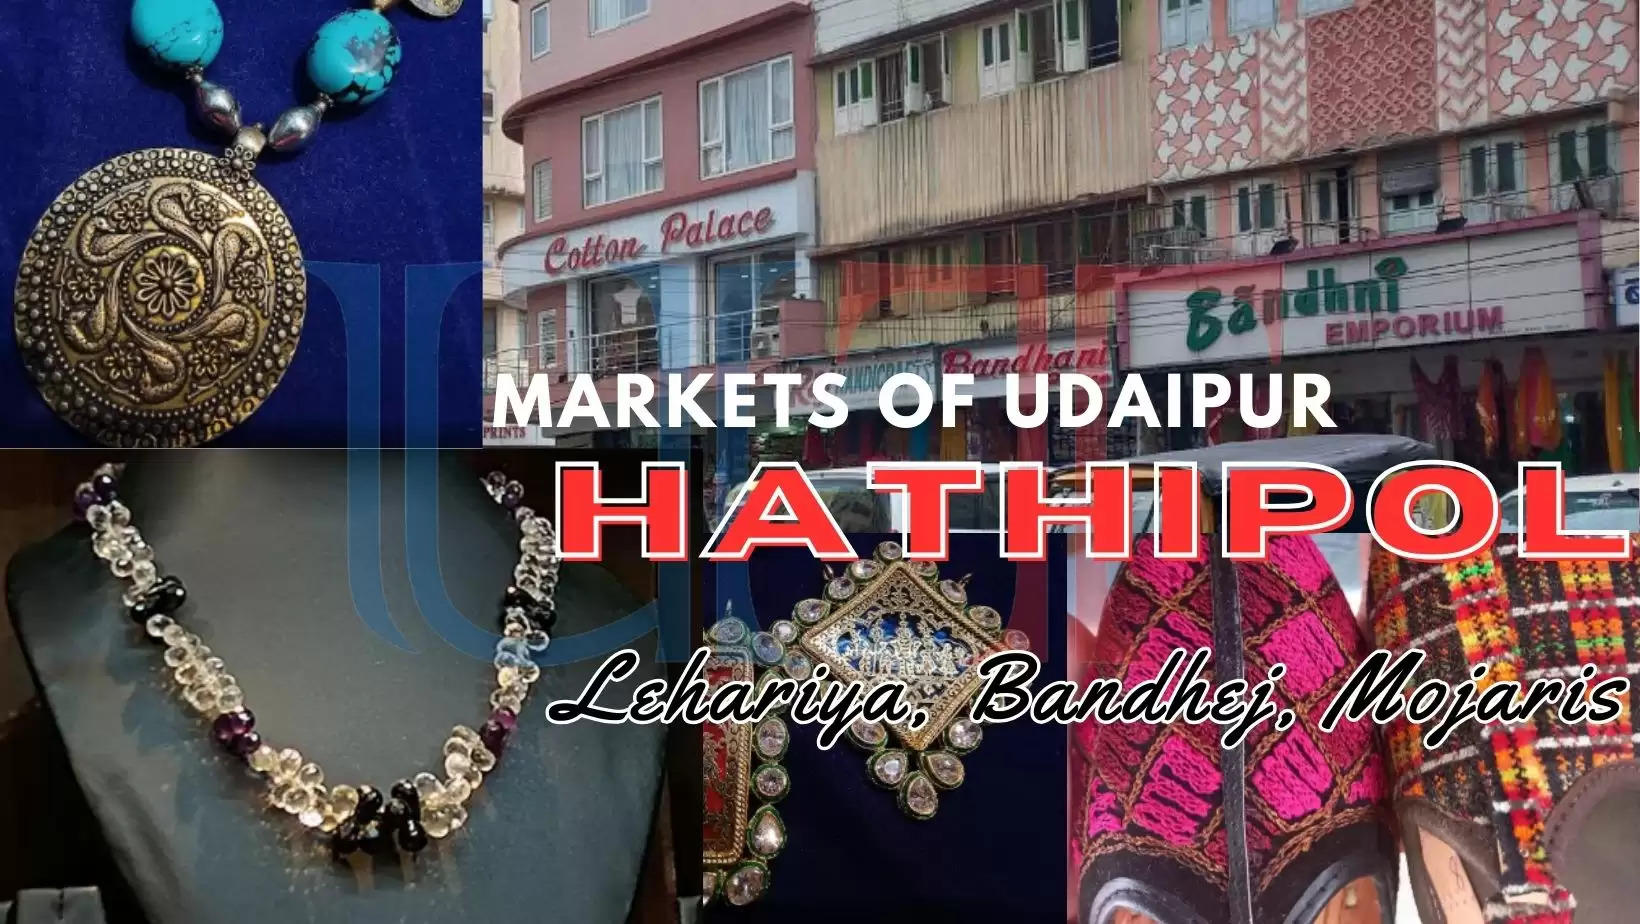 Markets of Udaipur Hathipol Tourist markets in Udaipur, rajasthani handicraft market in Udaipur, Mojaris, rajasthan footwear in udaipur, bandhej, lehariya, udaipur handicraft market, best place to buy rajasthani handicraft, mojaris, bandhej, lehariya